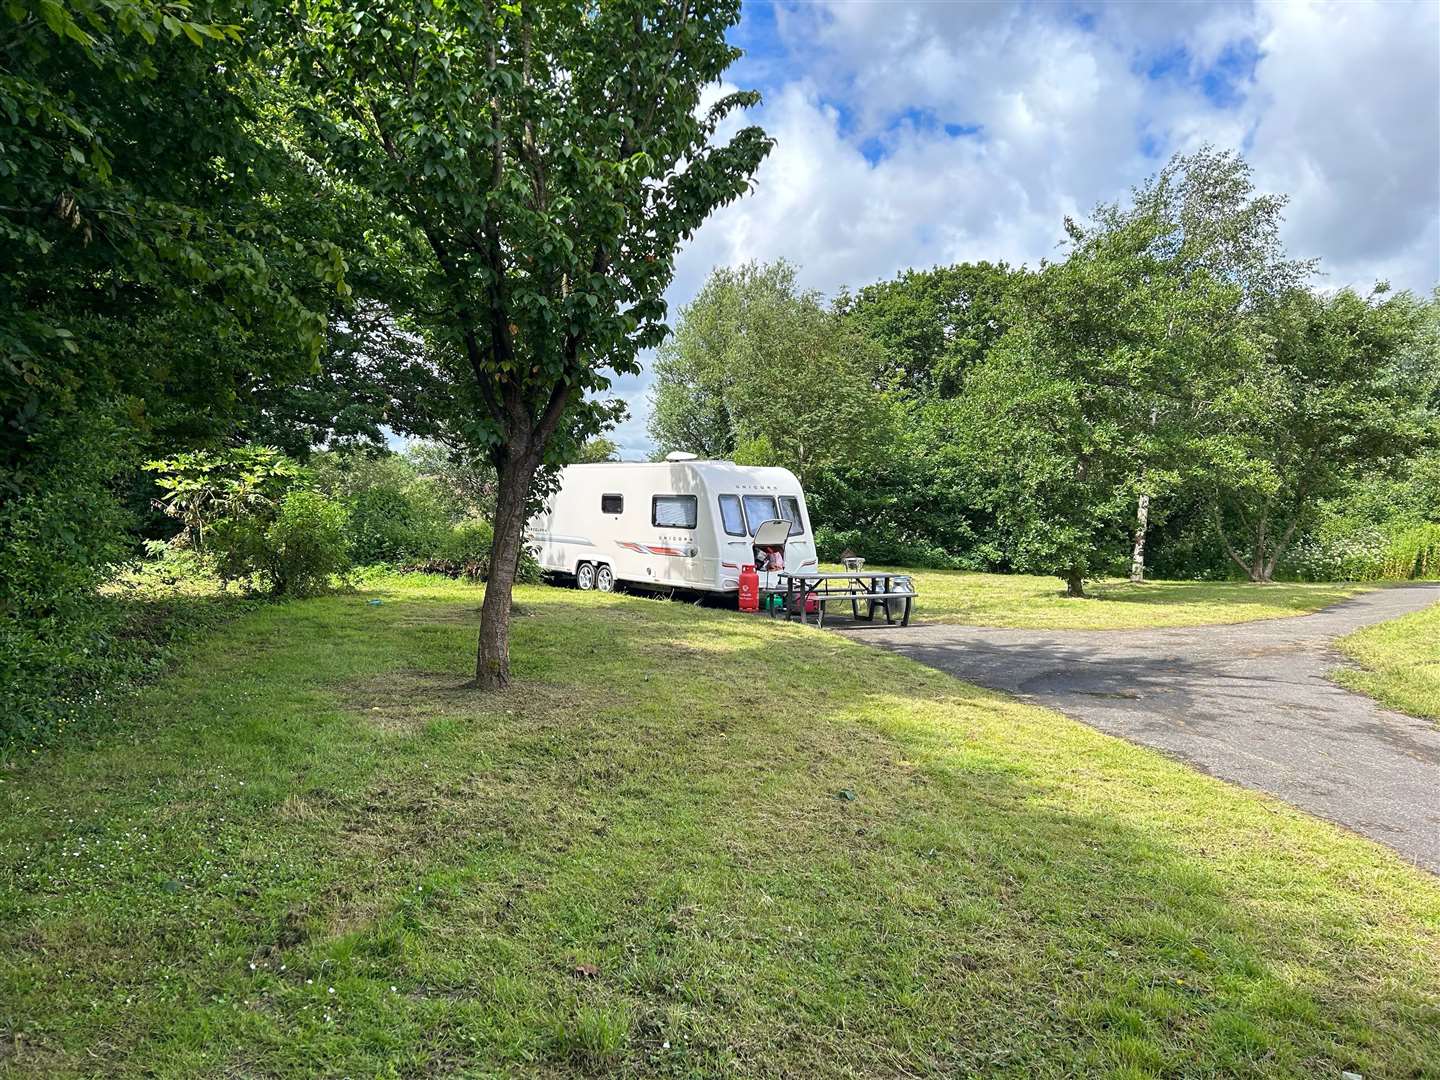 A caravan behind the Kingsnorth Recreation Centre